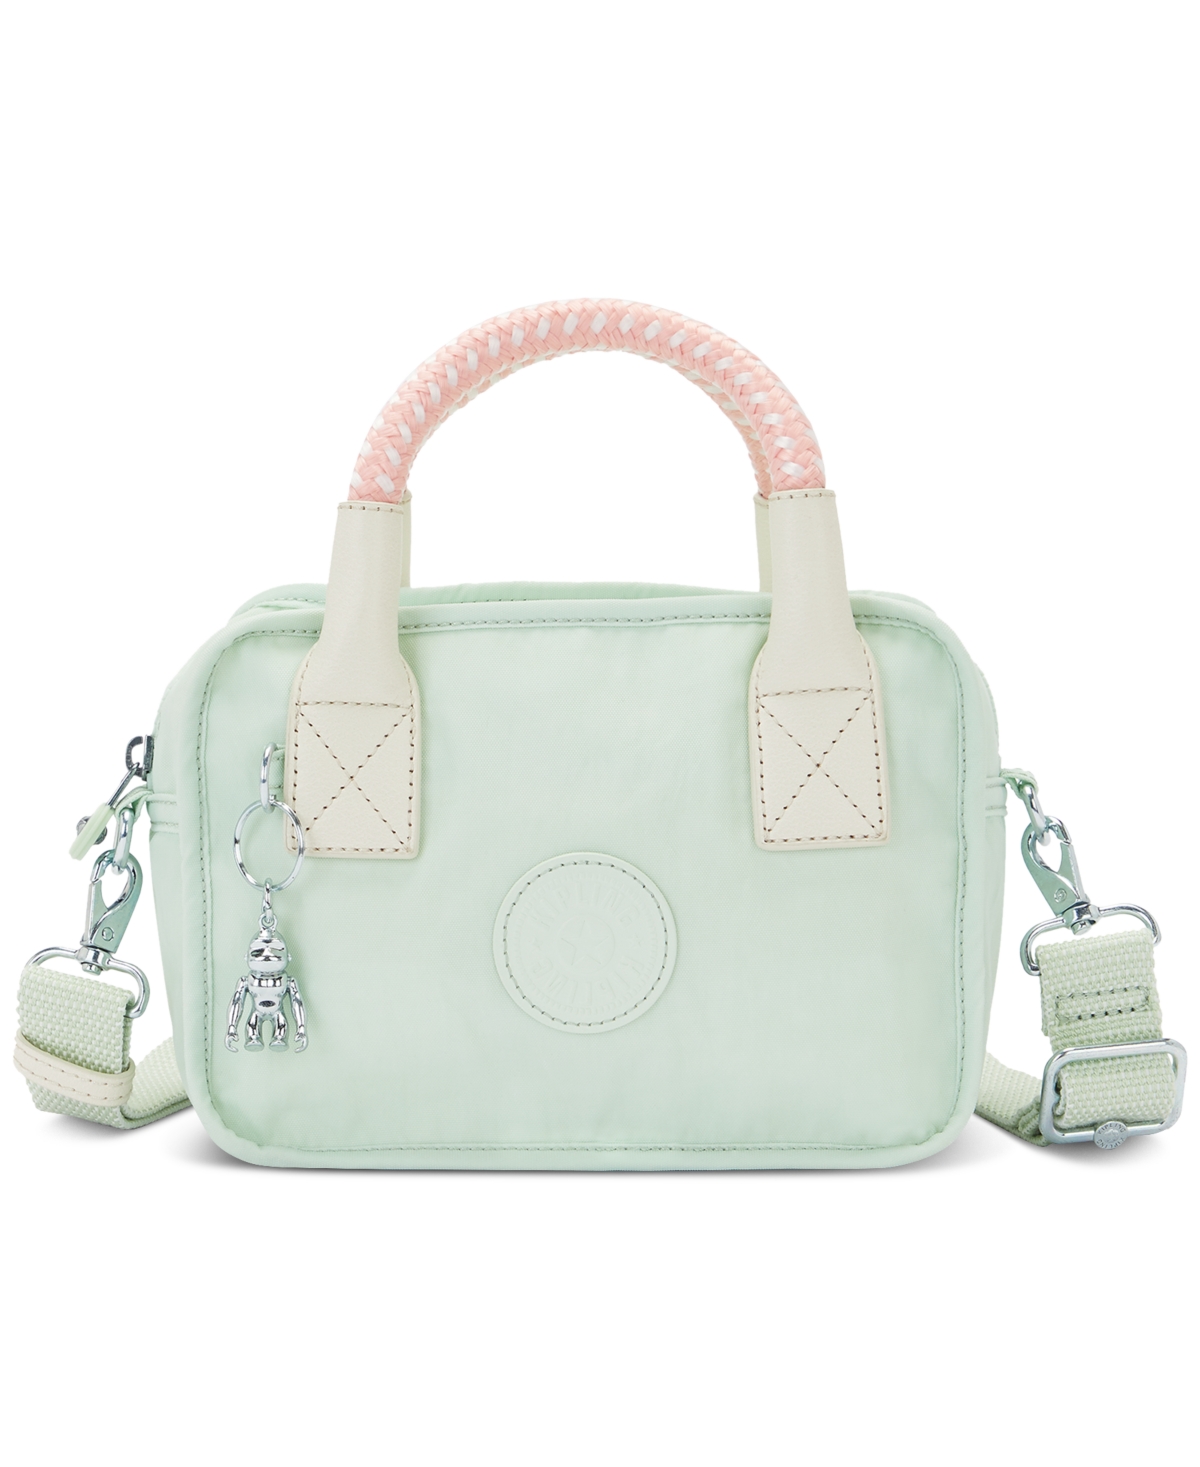 Kipling Kirsty Nylon Top Handle Zip-Top Small Handbag